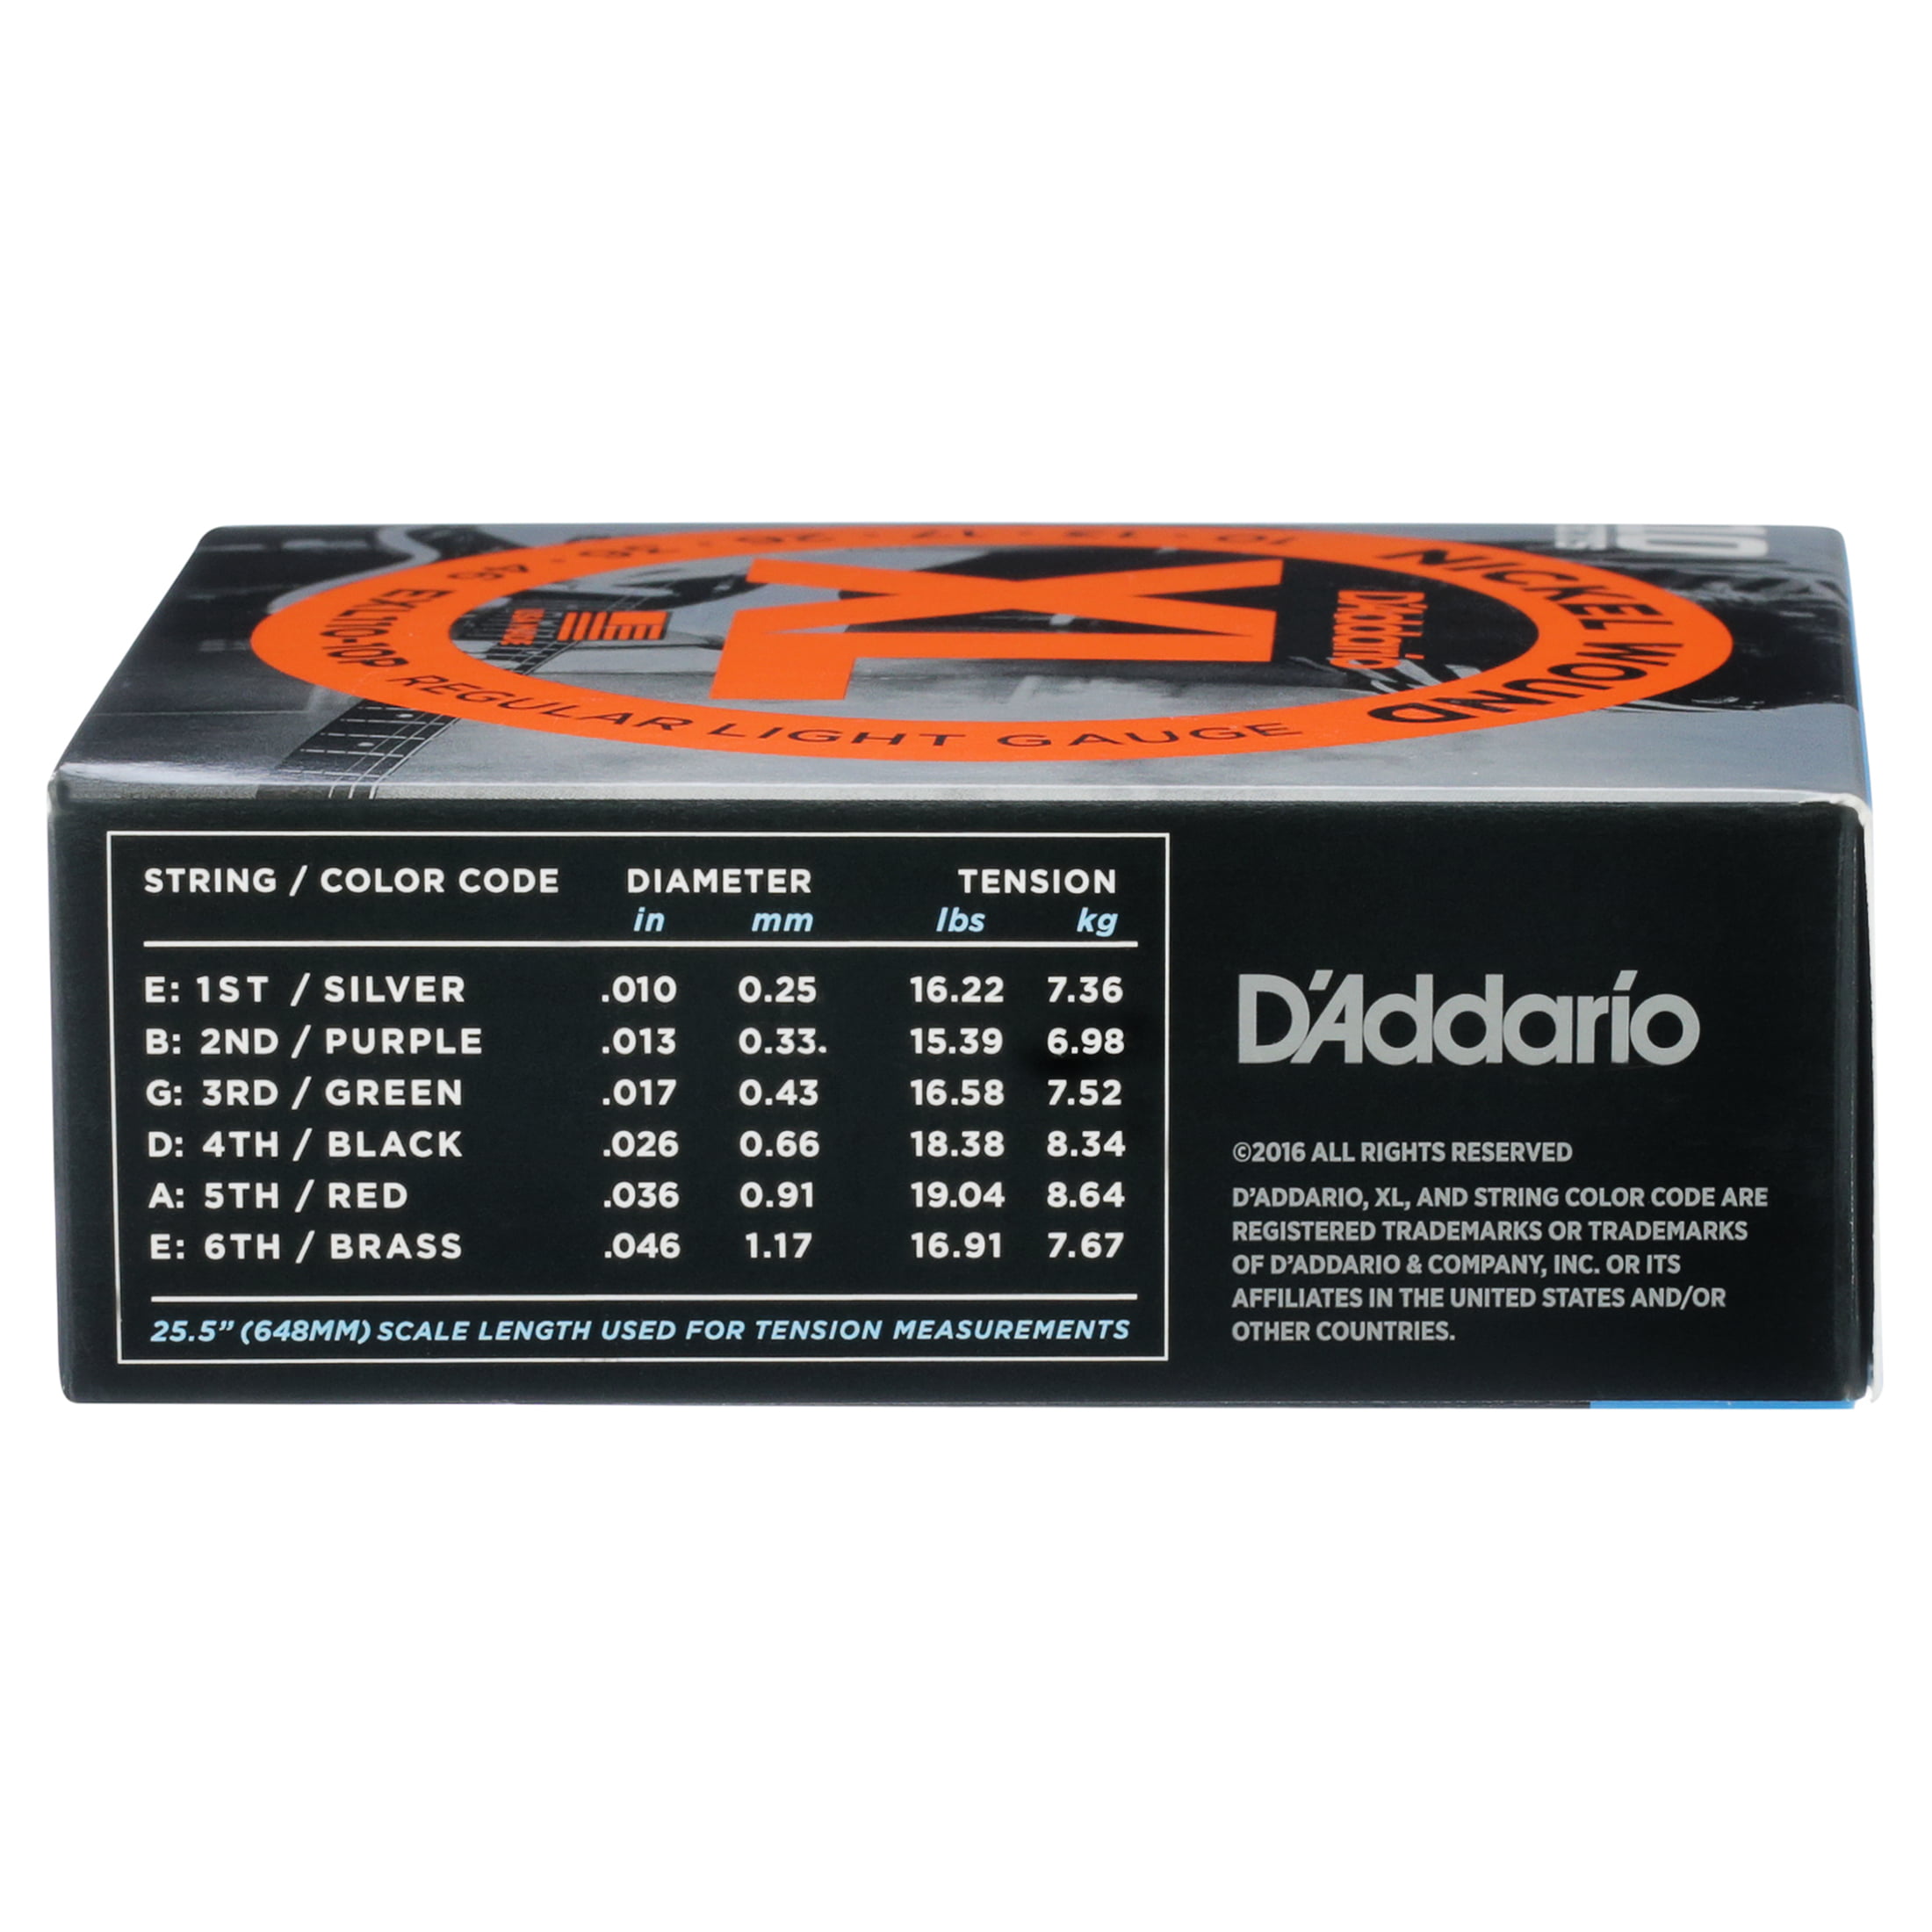 D'Addario EXL110-10P Nickel Wound Electric Guitar Strings, Regular 